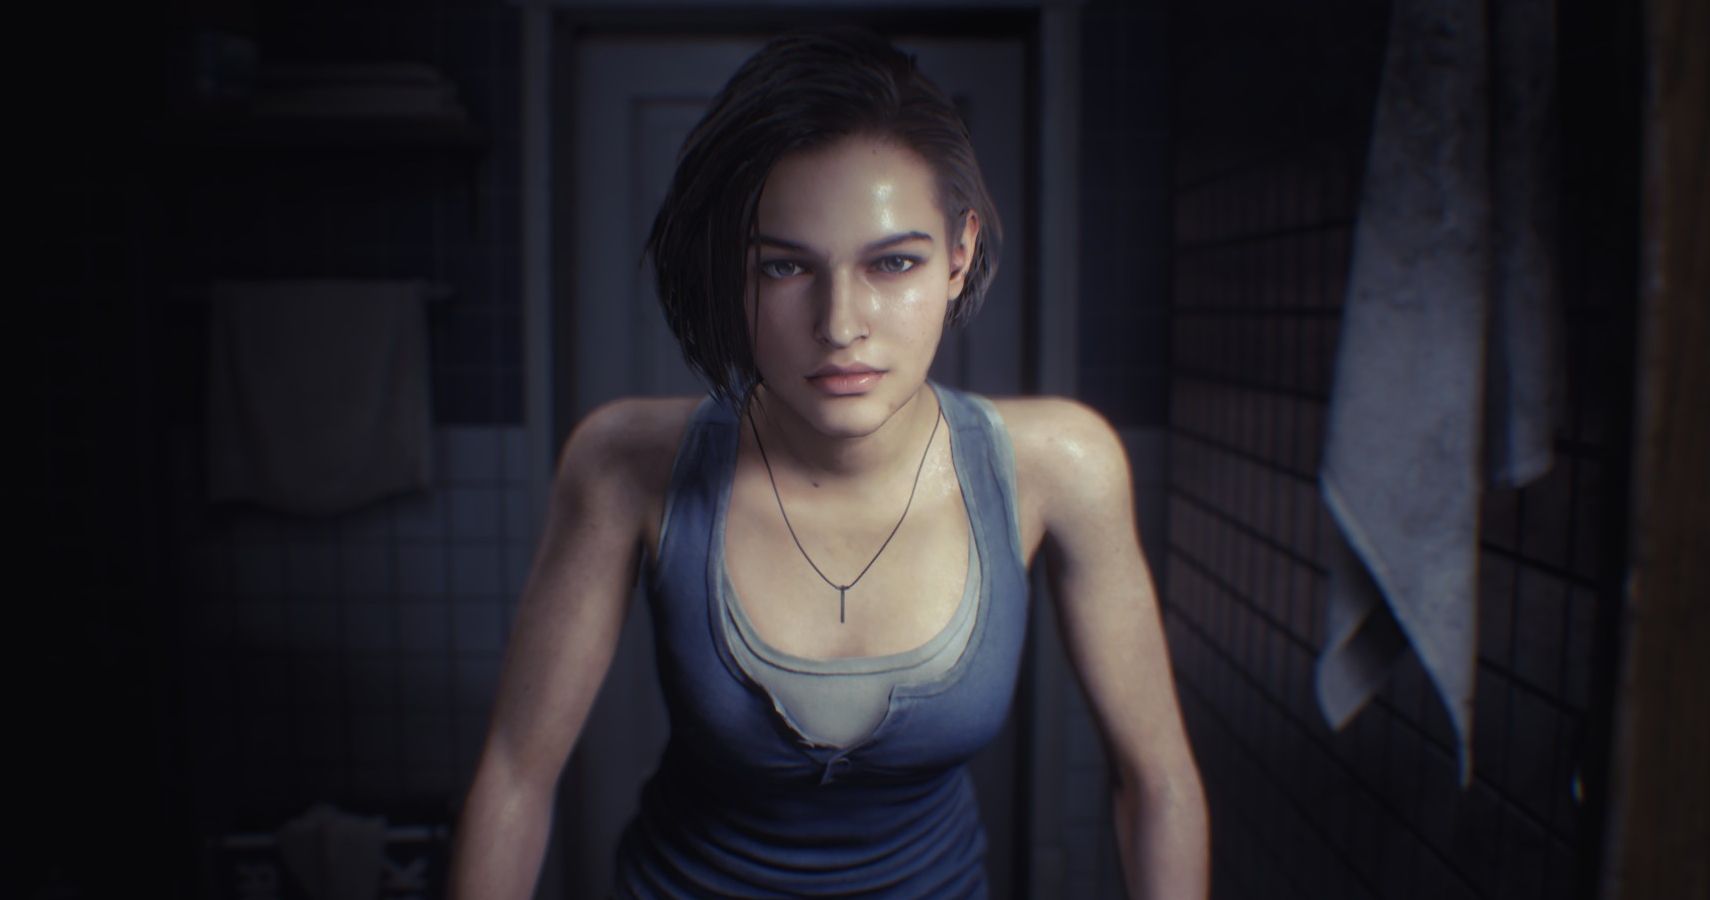 Resident Evil 3 remake announced, launch set for April 3 2020